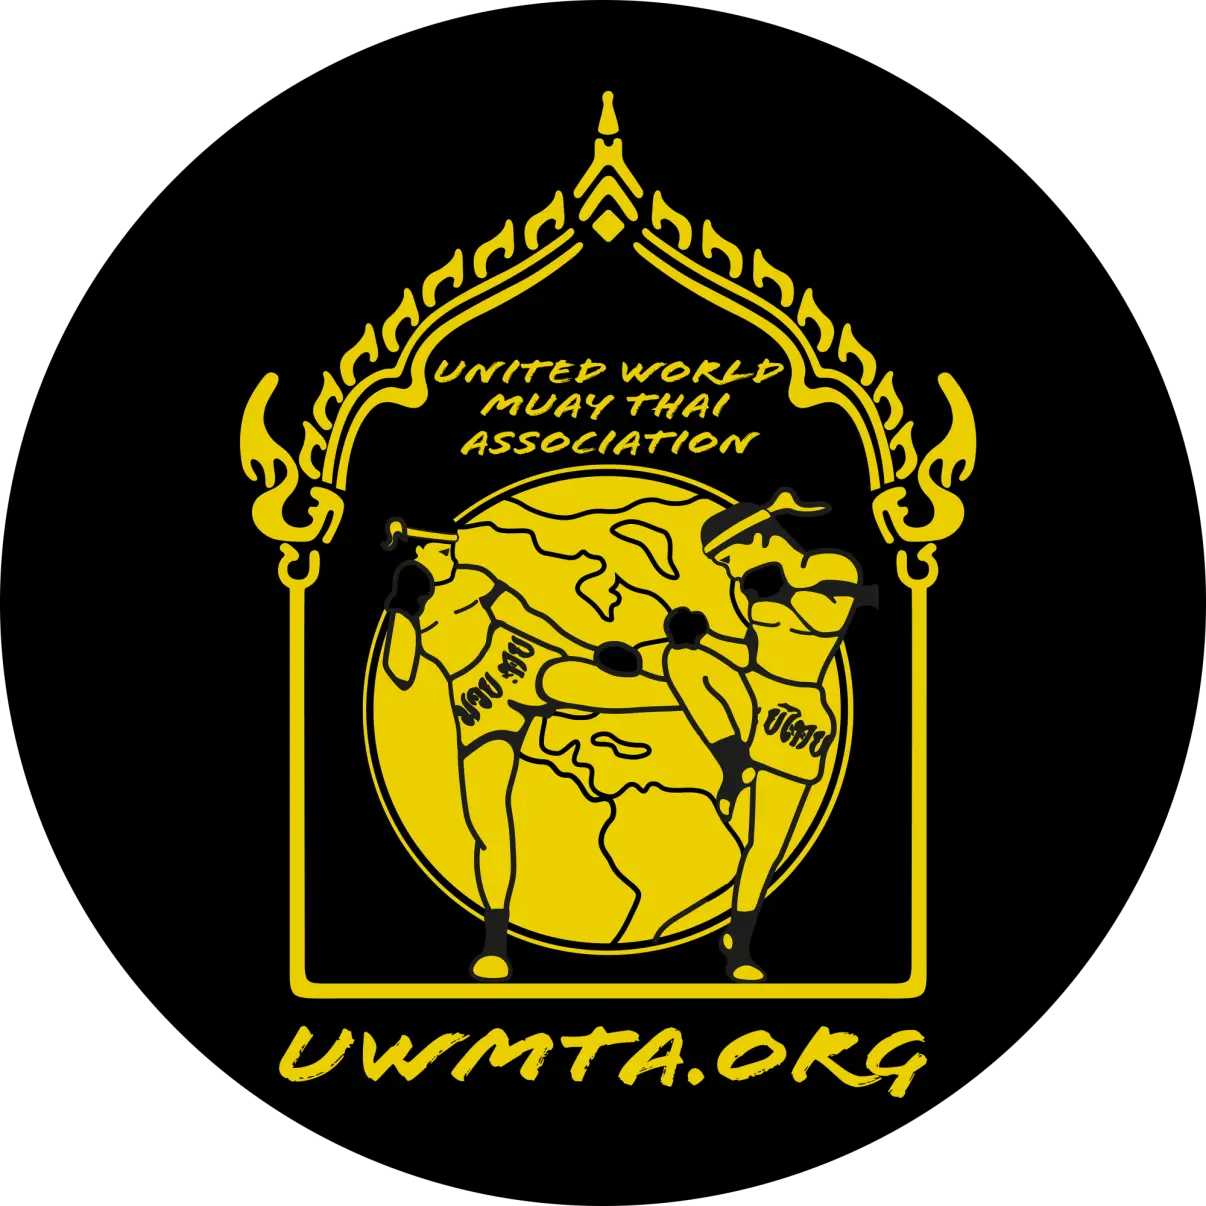 United World Muay Thai Association Logo©